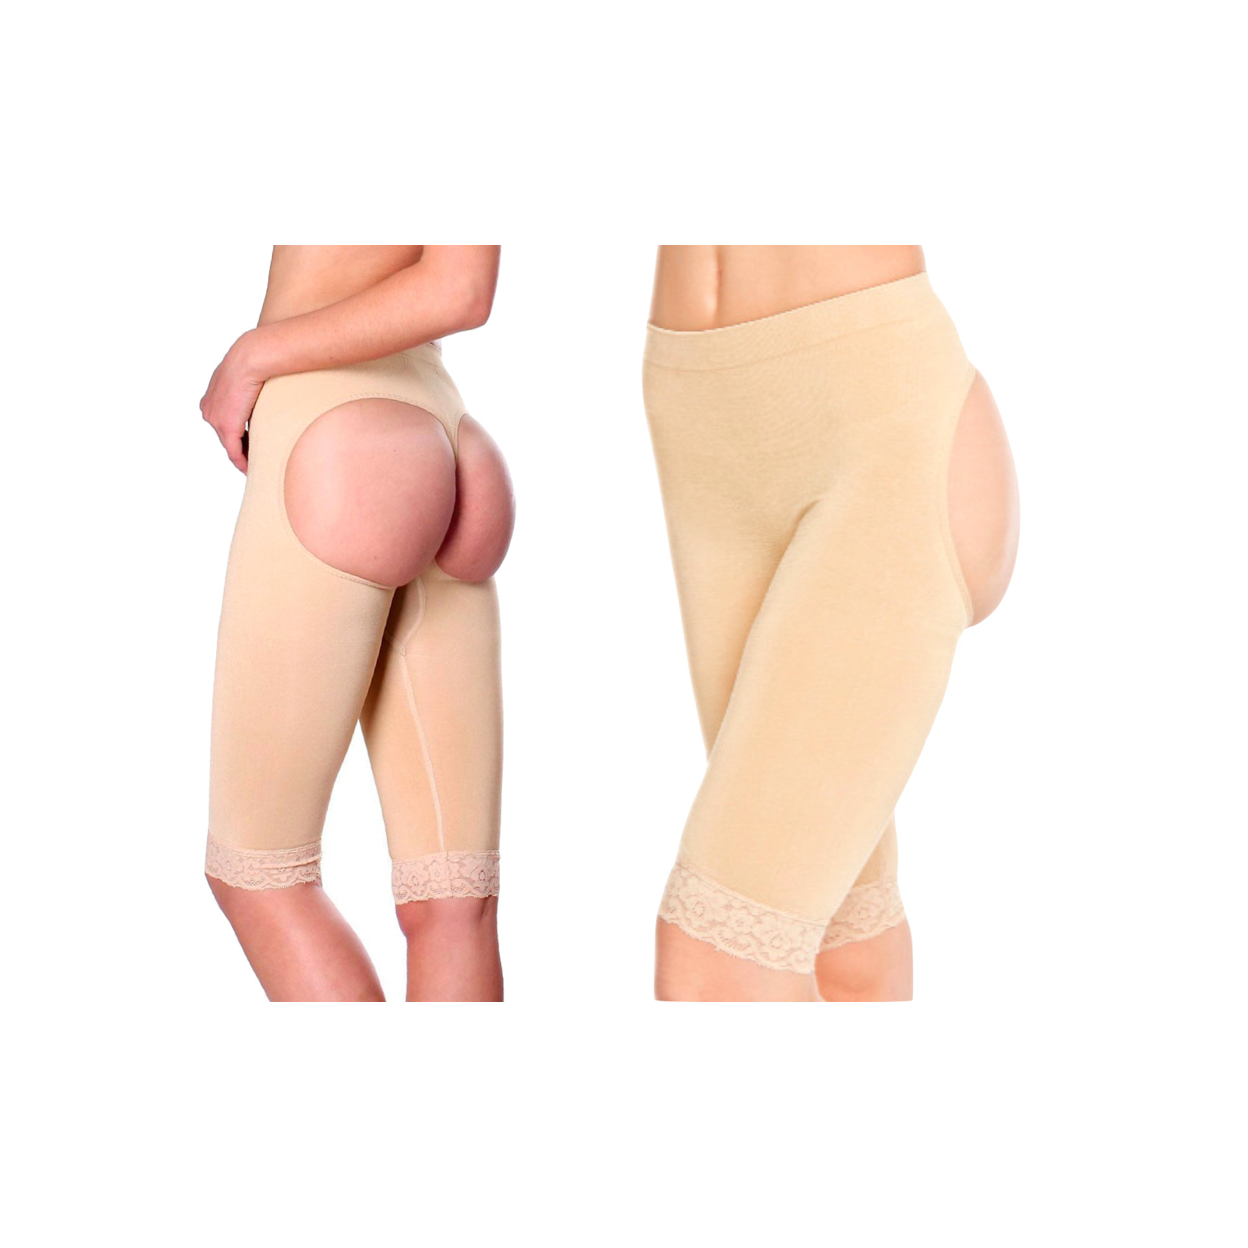 Women's Butt Lifting Thigh Trimming Shapewear - Beige, L/XL